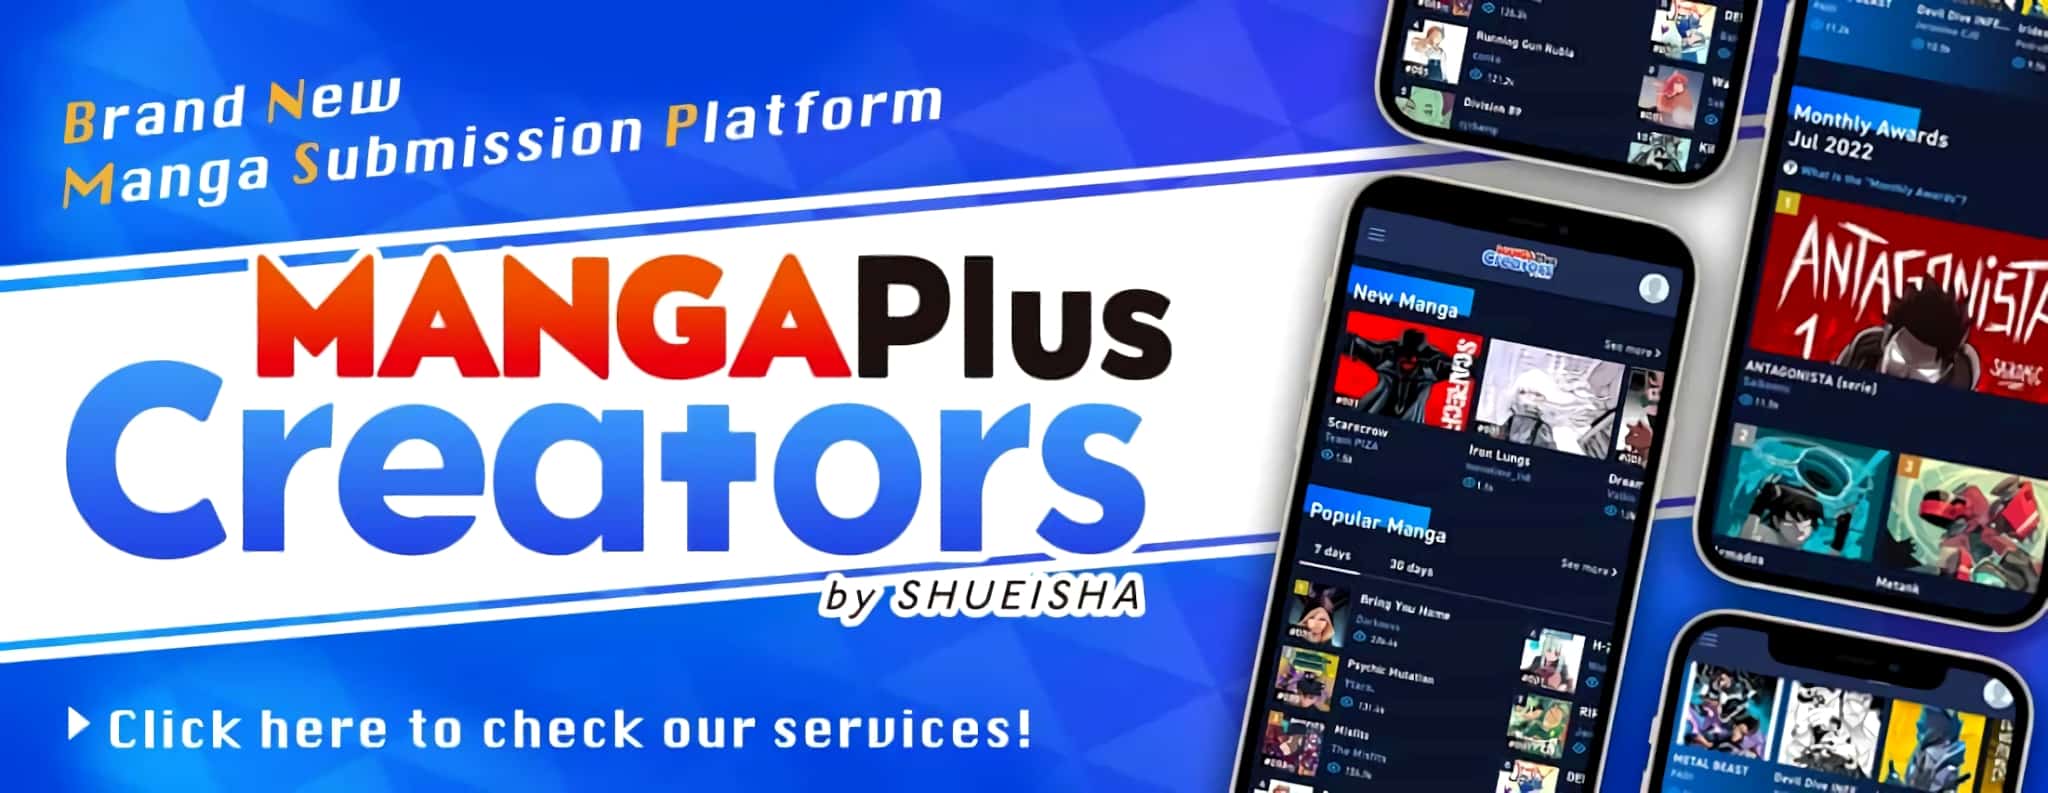 Annonce de la plateforme MANGA Plus Creators by Shueisha